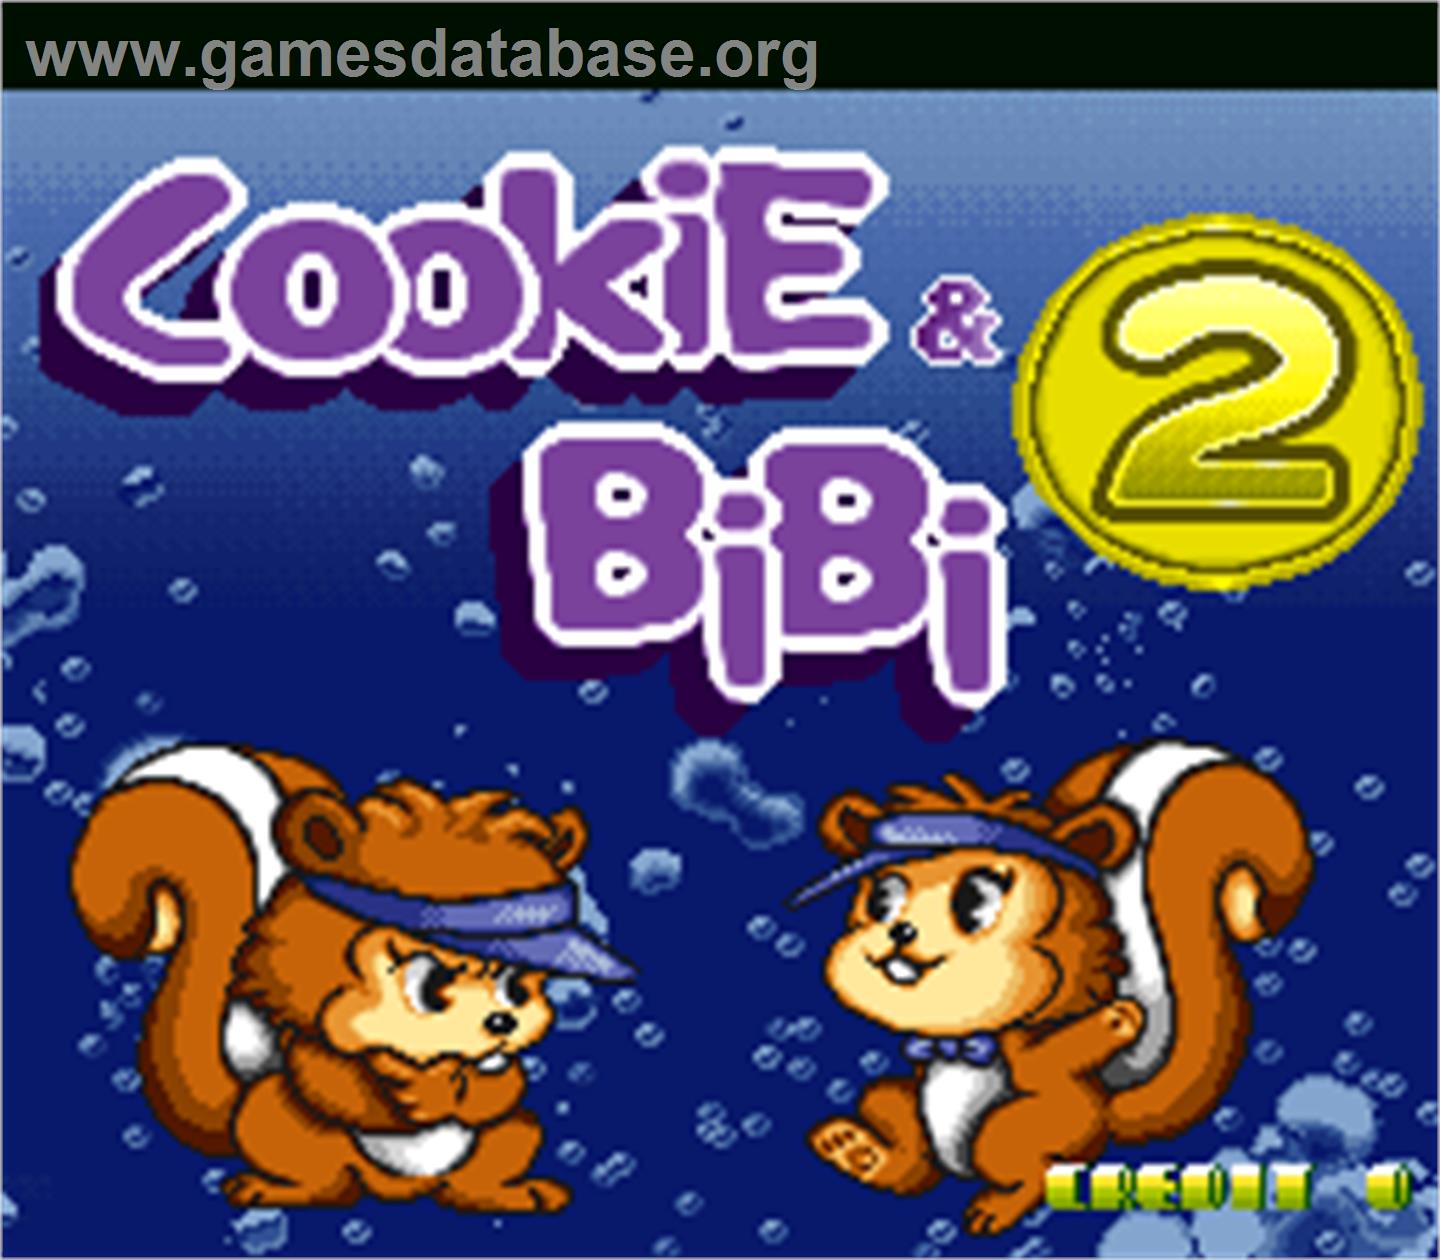 Cookie & Bibi 2 - Arcade - Artwork - Title Screen